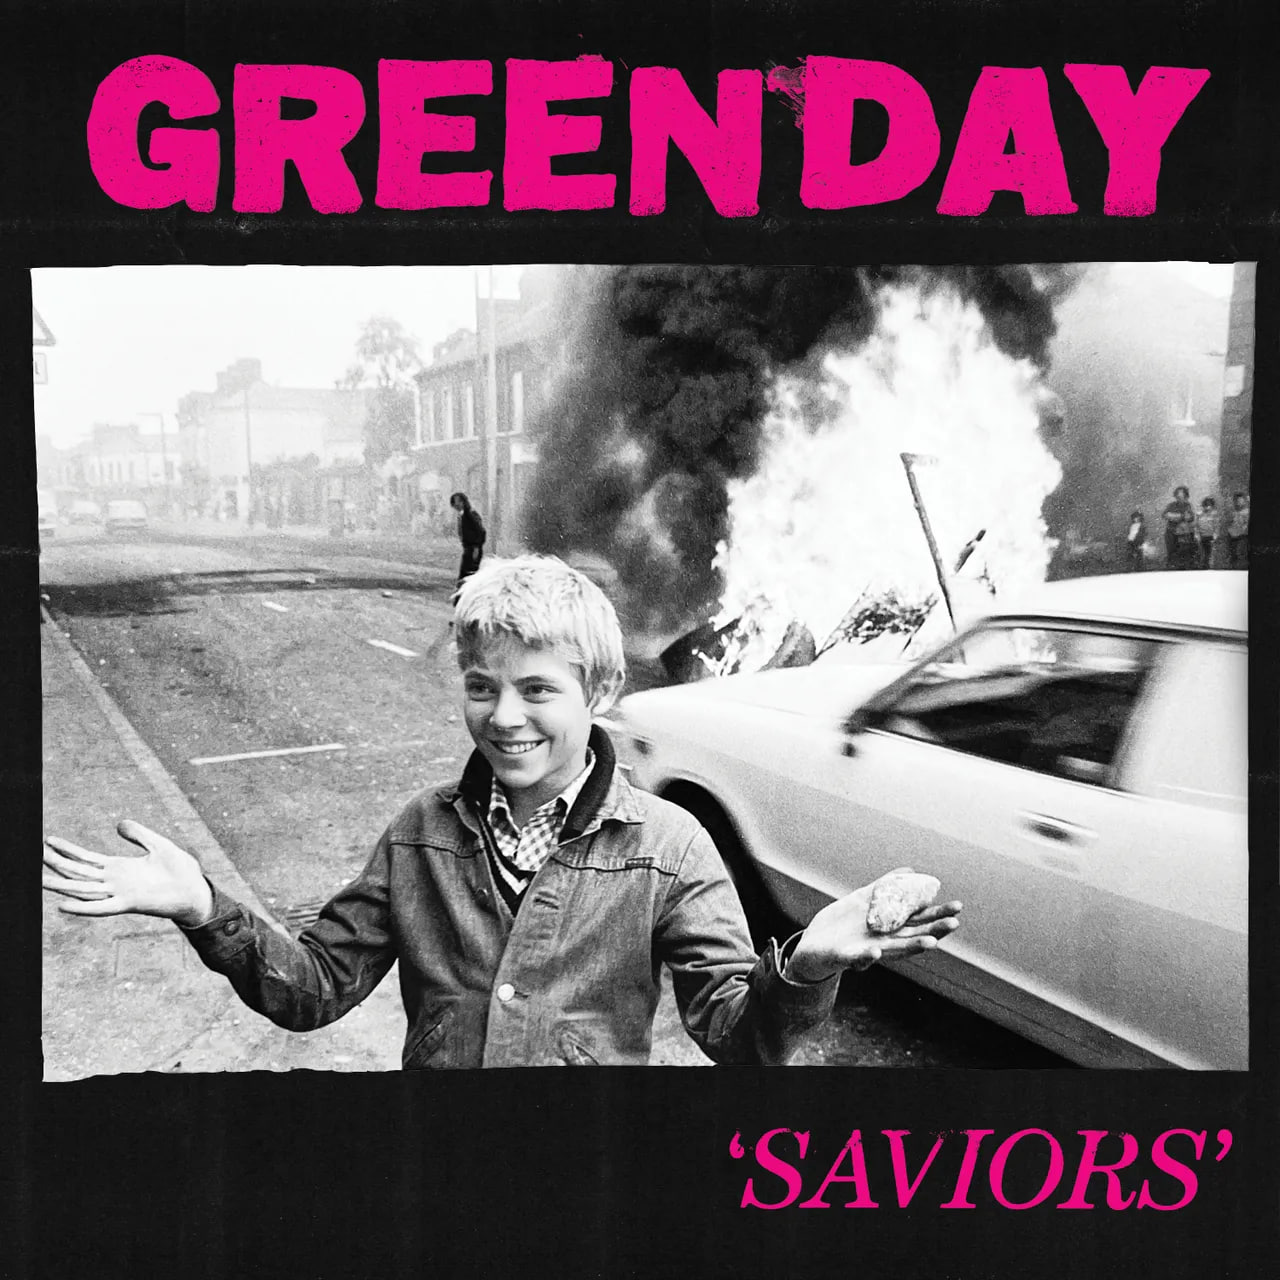 Рок Warner Music Green Day - Saviors (Limited Edition Magenta & Black Vinyl LP) джаз warner music rod stewart holland jools swing fever green vinyl lp